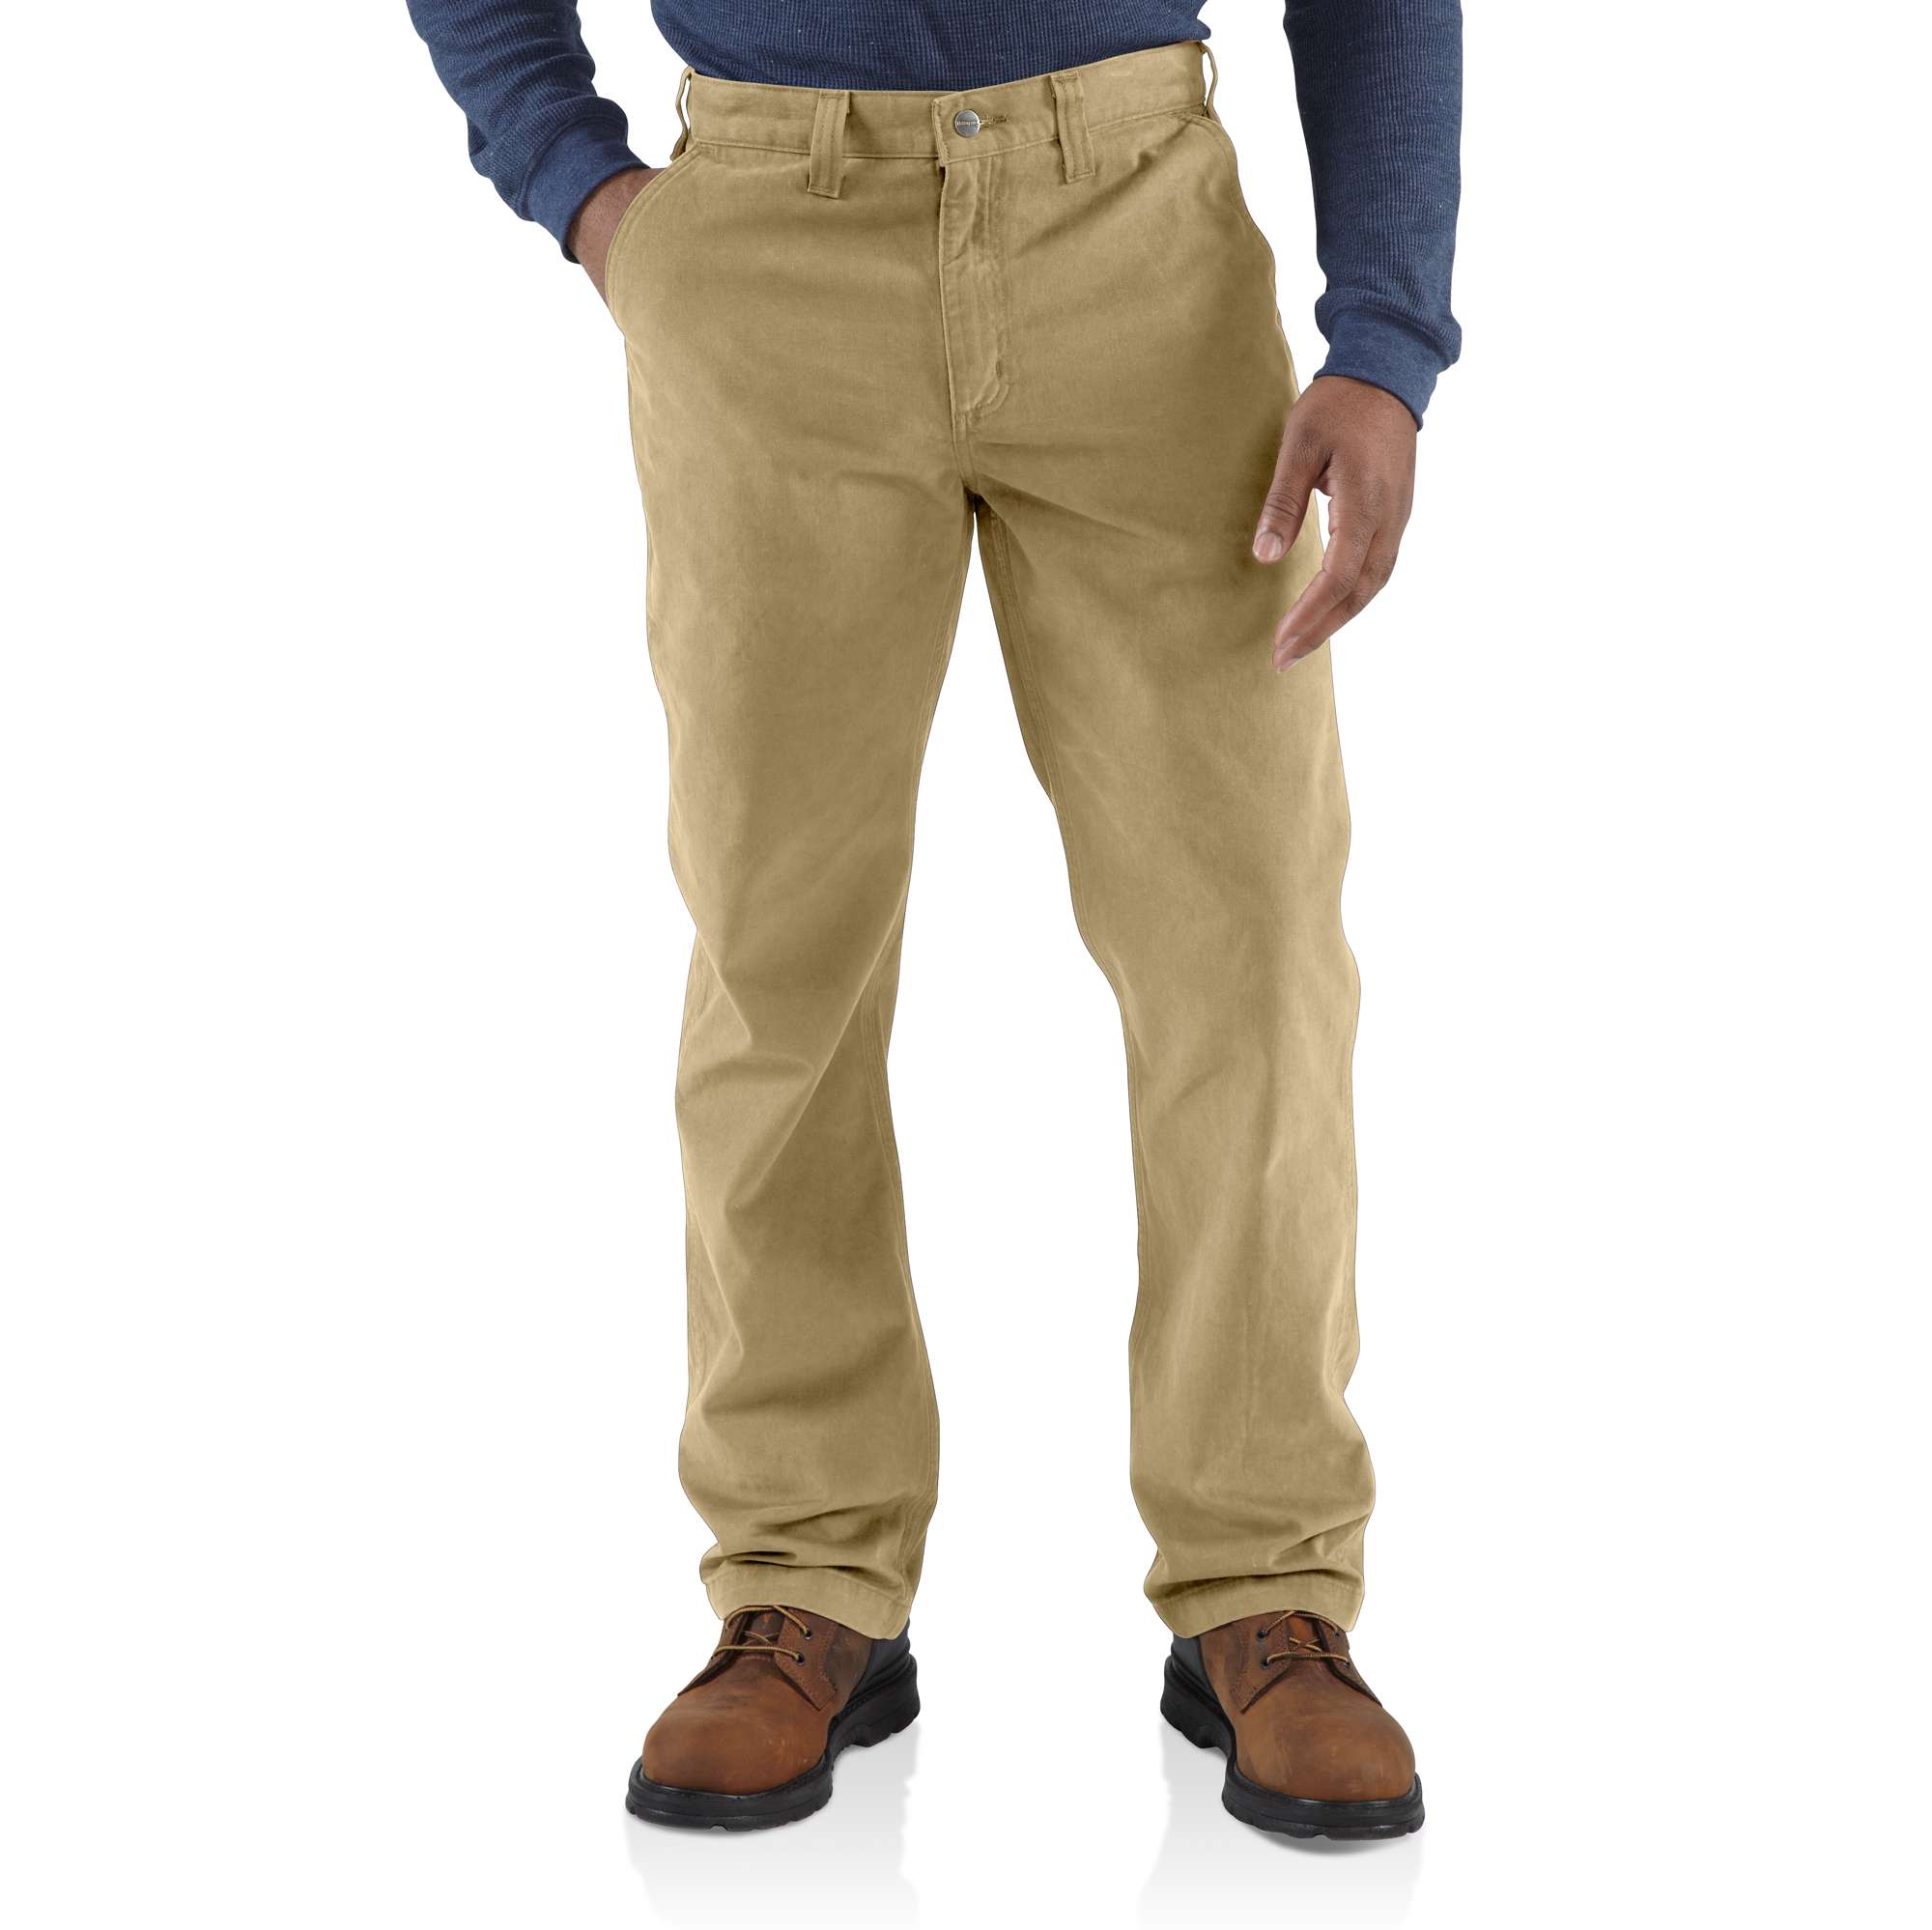 Aliexpress.com : Buy New Men's casual pants Fashion Cotton